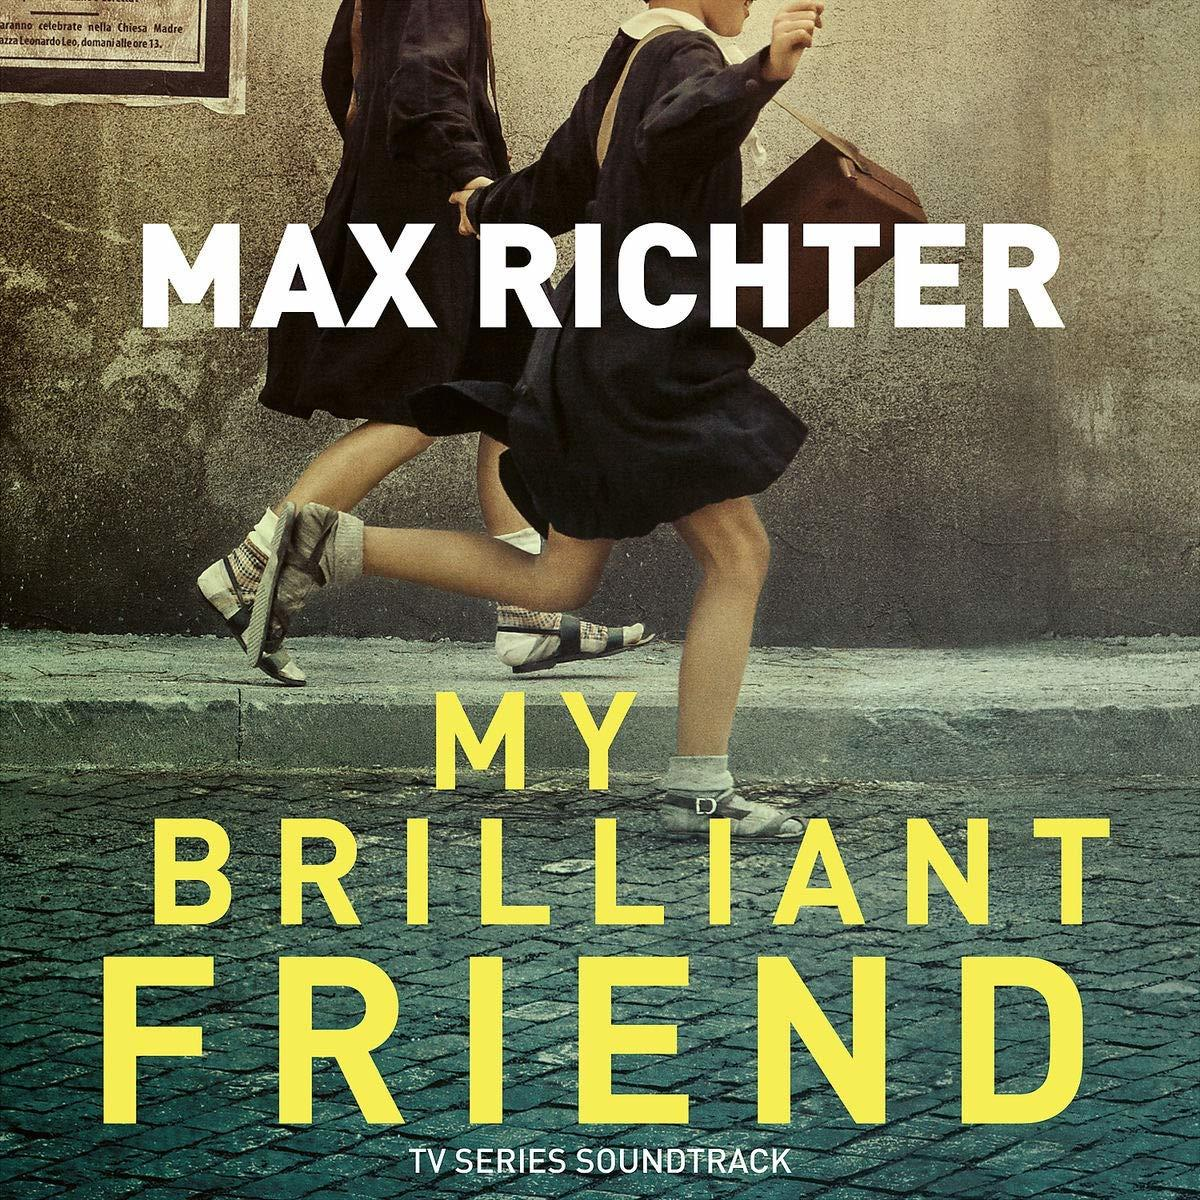 My Max (CD) - - Brilliant Richter Friend